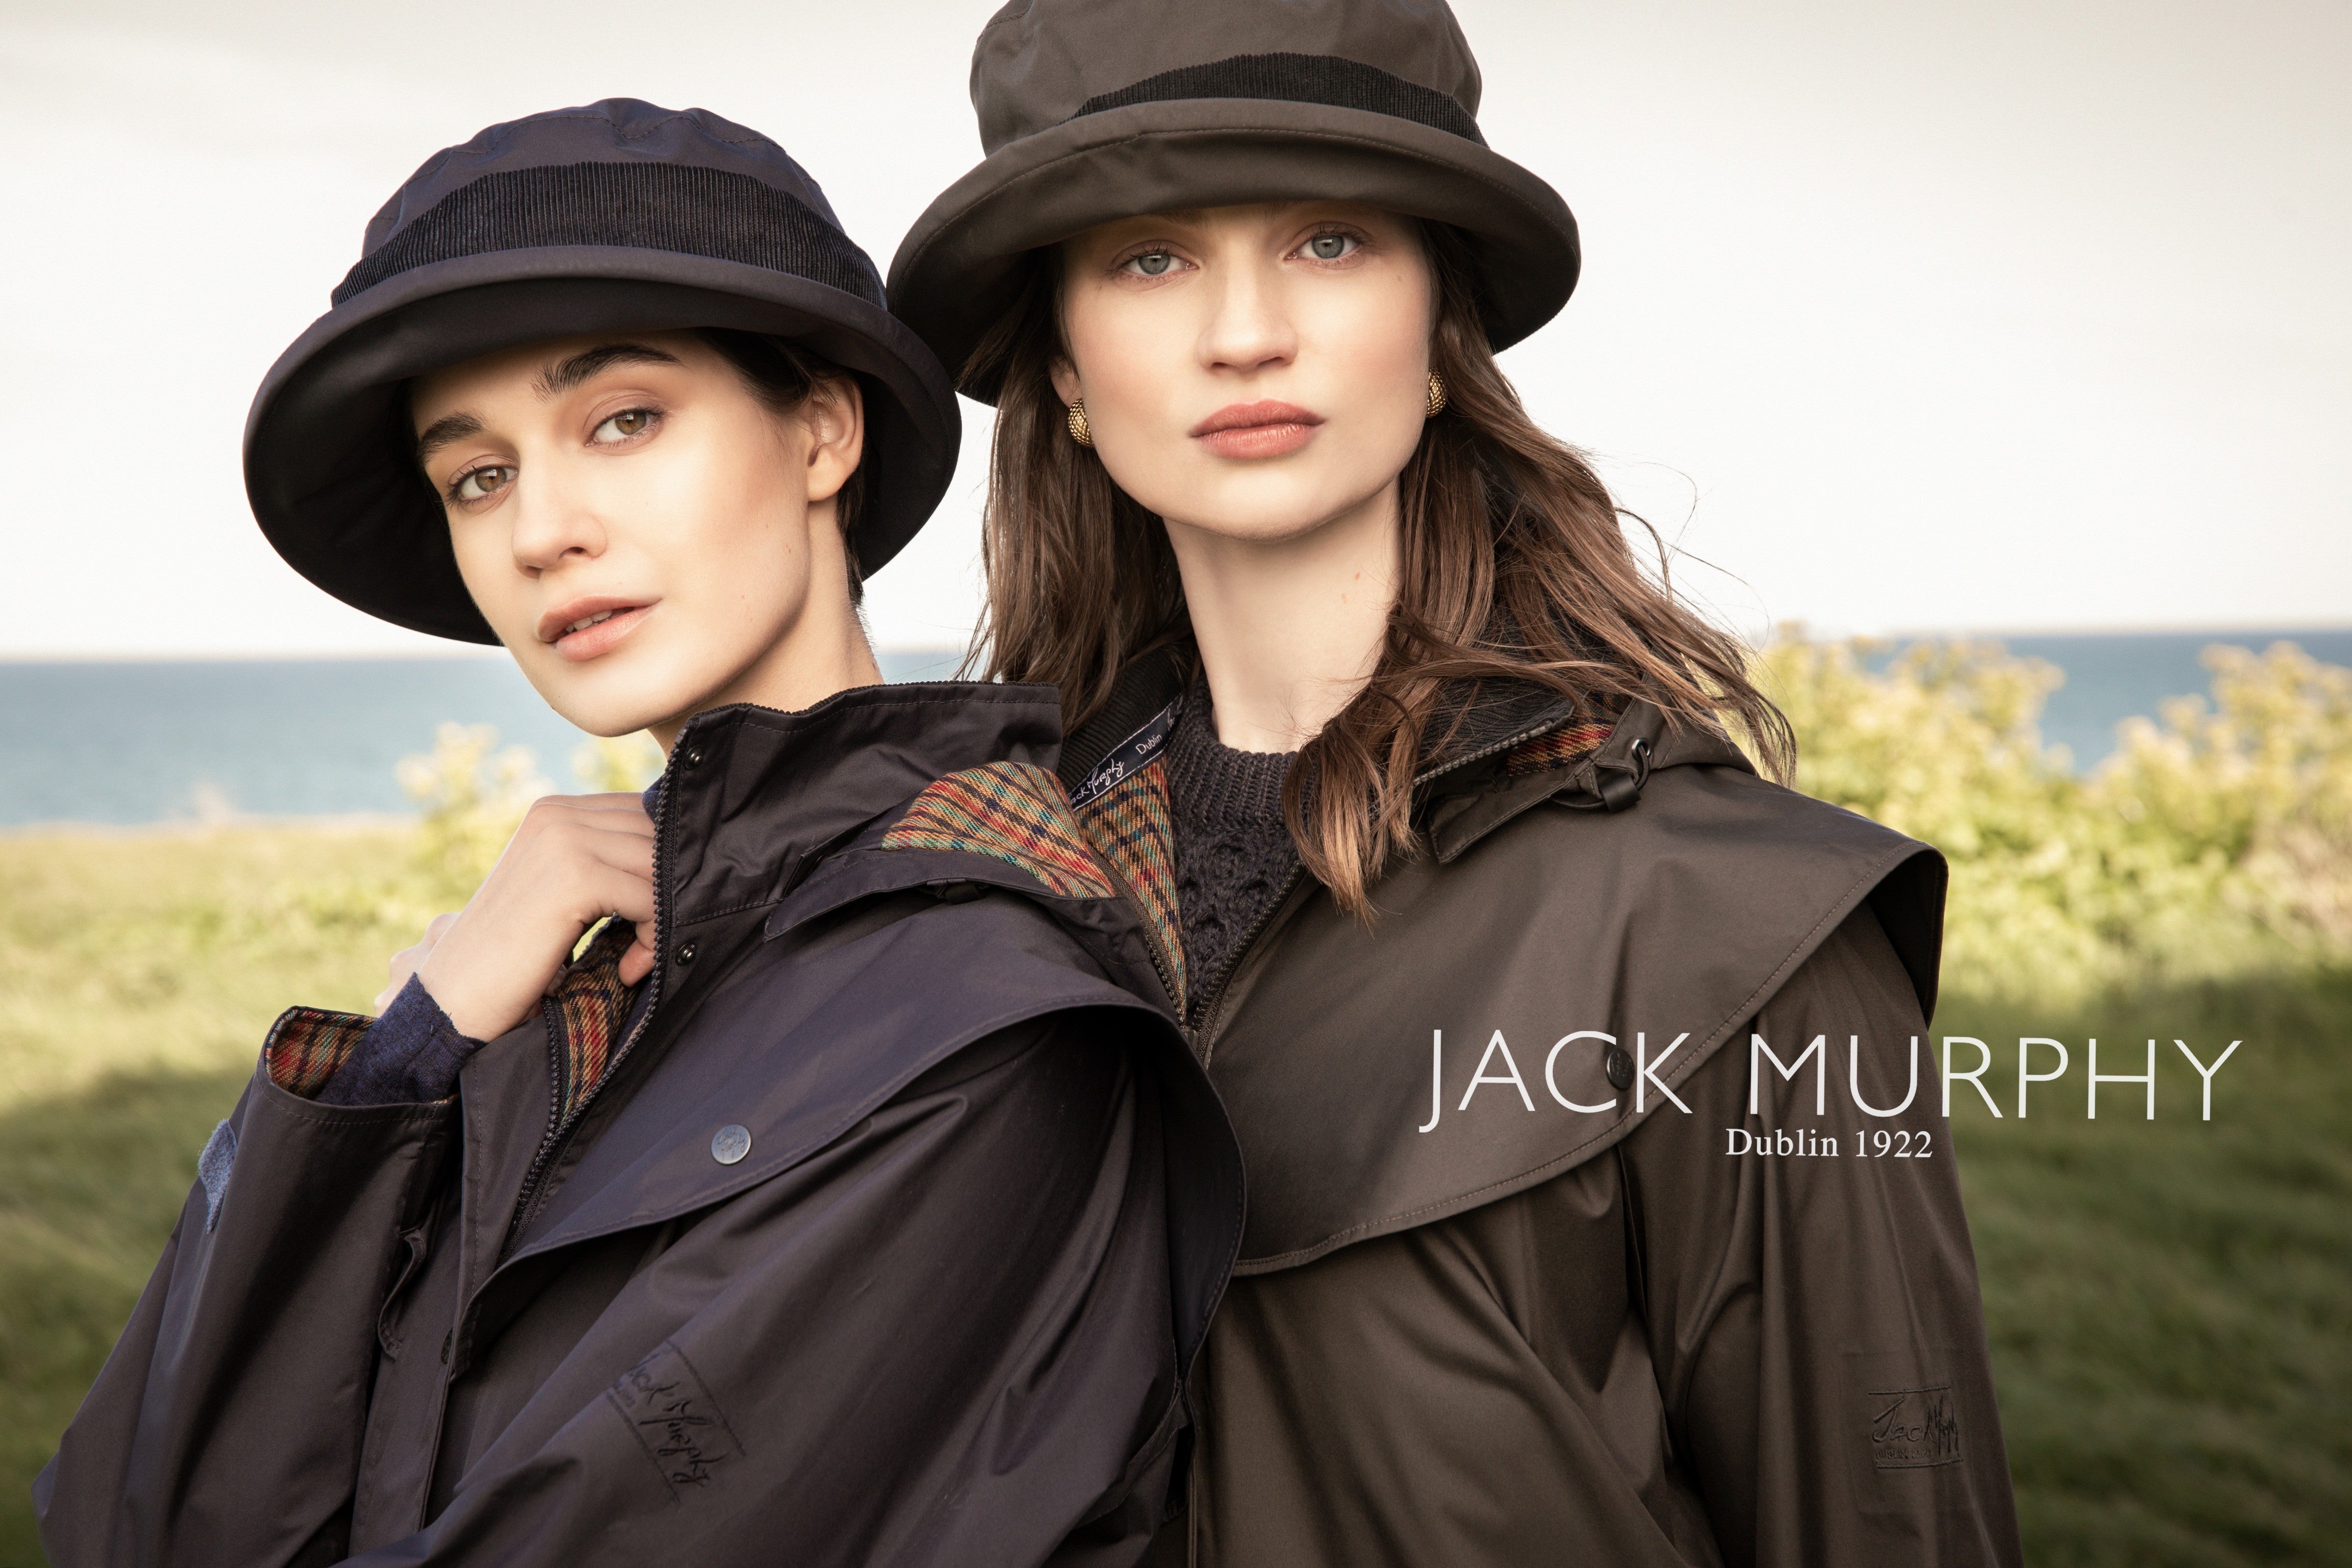 Two women in Malvern and cotswold waterproof jackets in Navy and olive and waterproof Malvern hat.